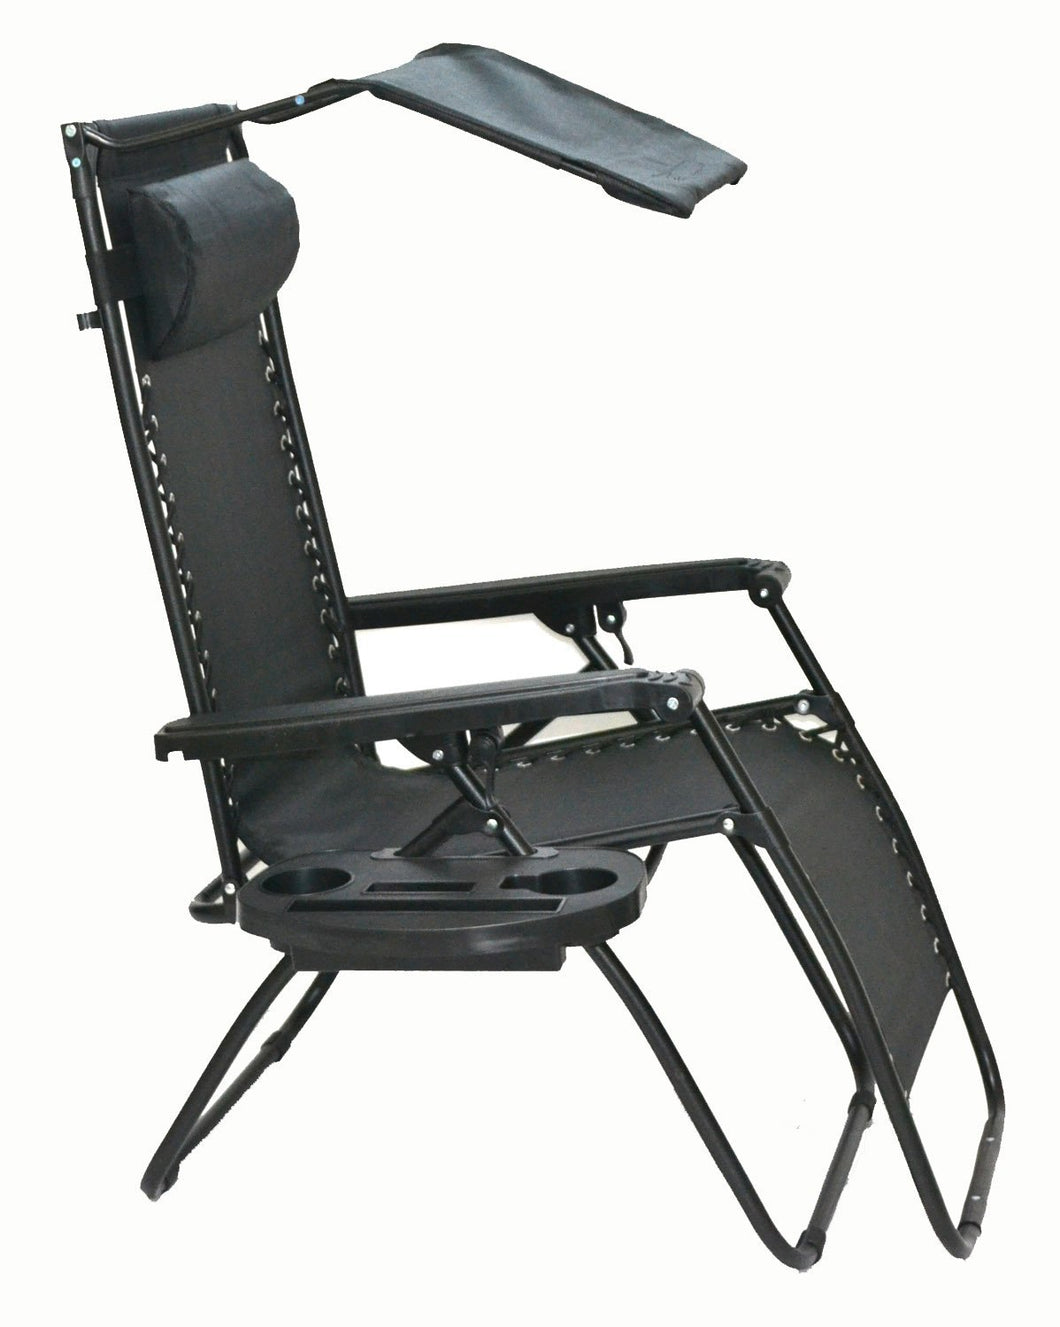 zero gravity chair with shade